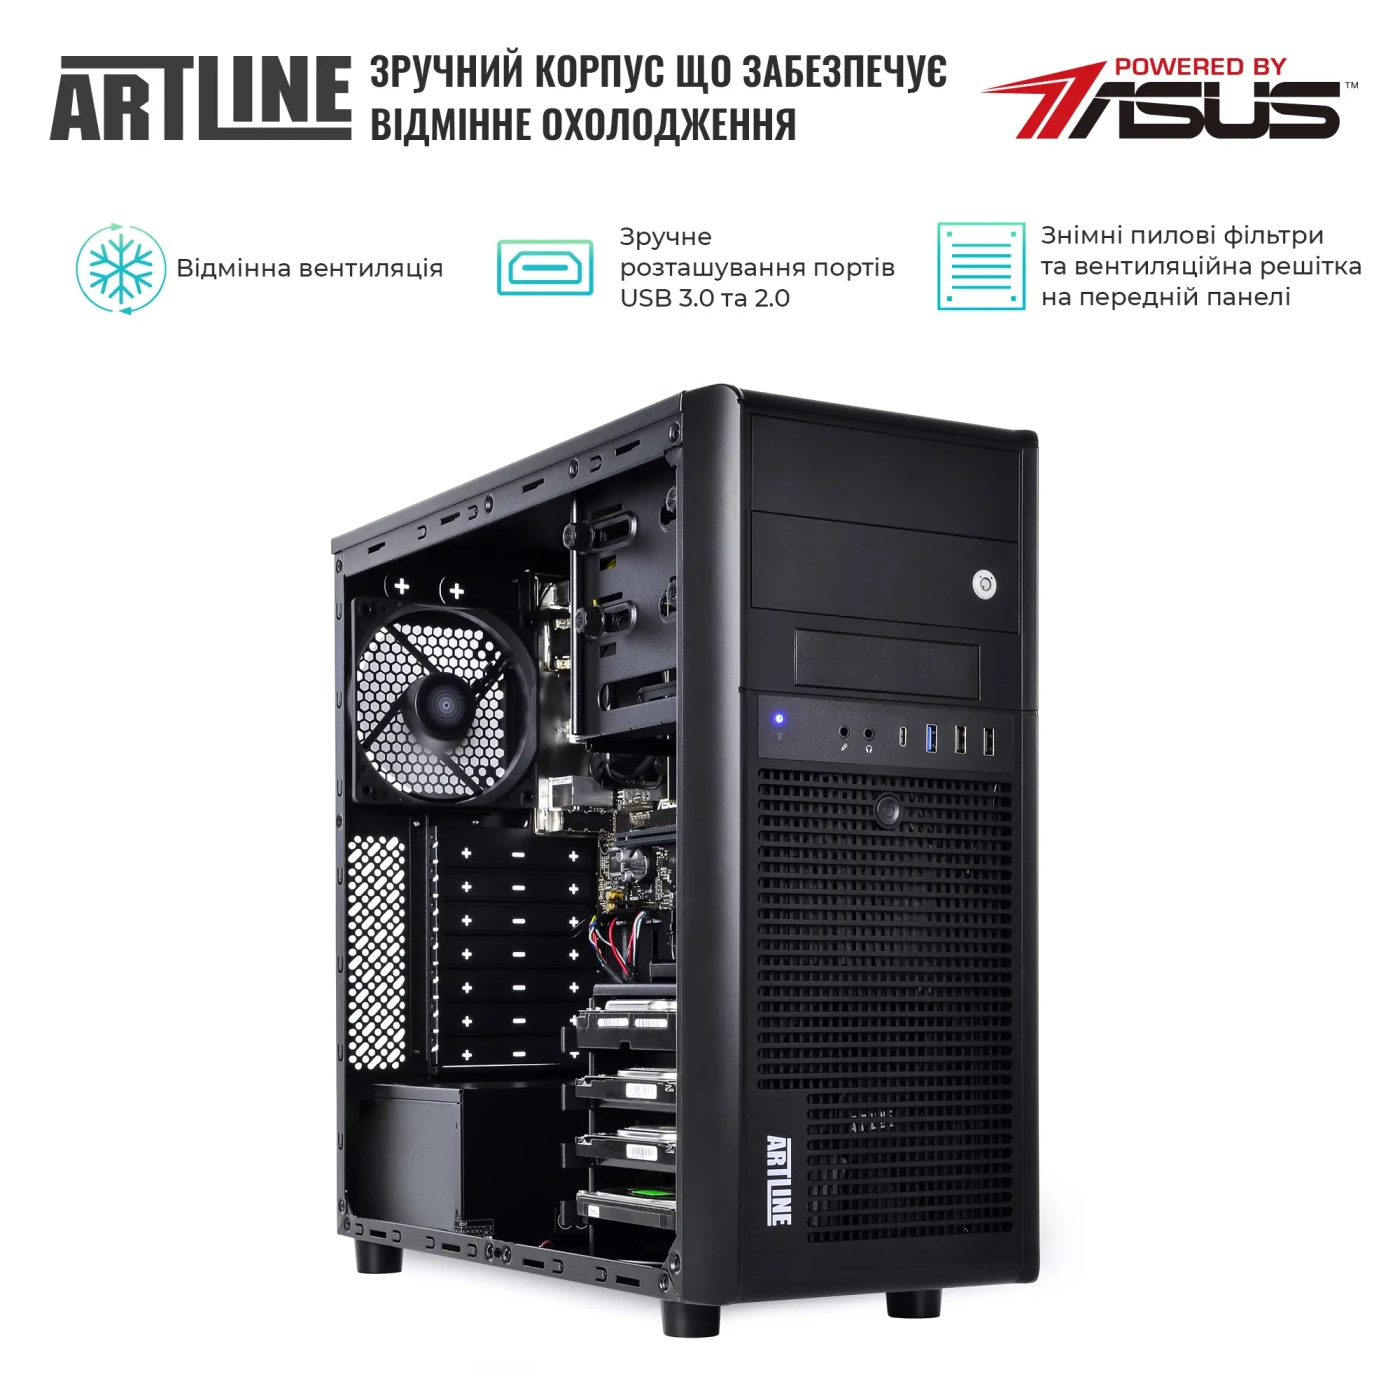 Купити Сервер ARTLINE Business T35v29 - фото 3